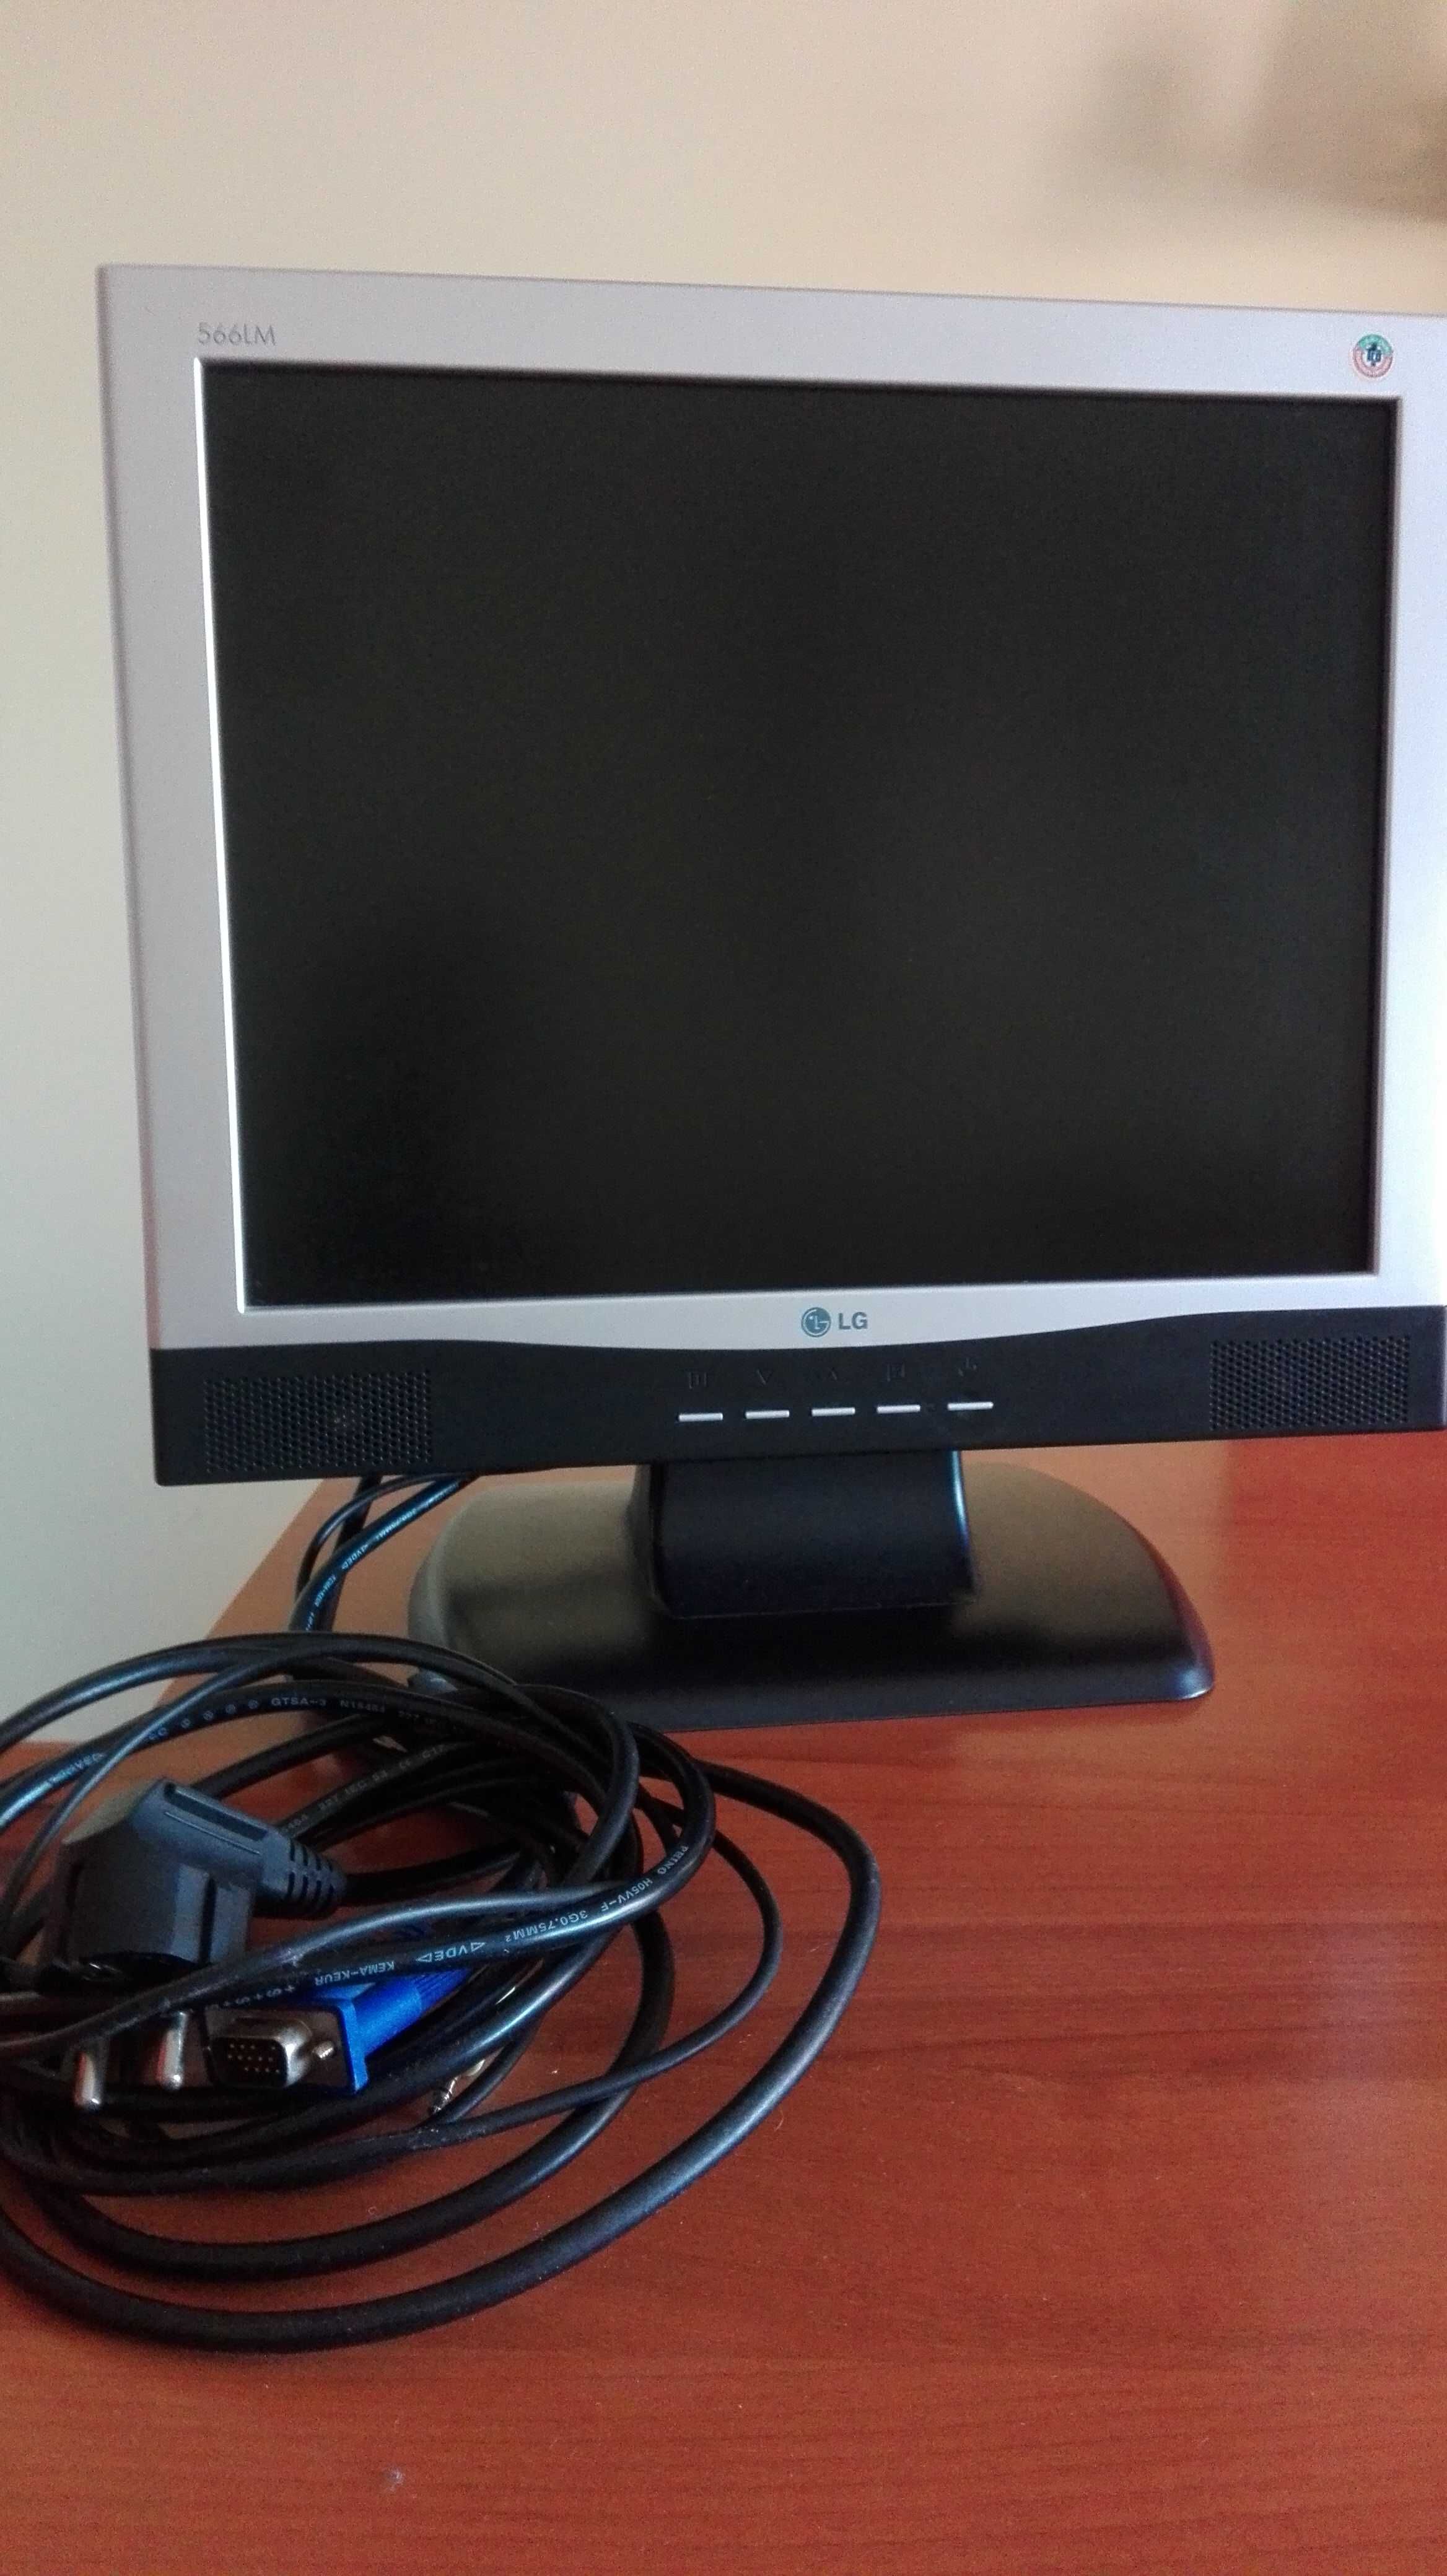 Monitor Computador LG566LM